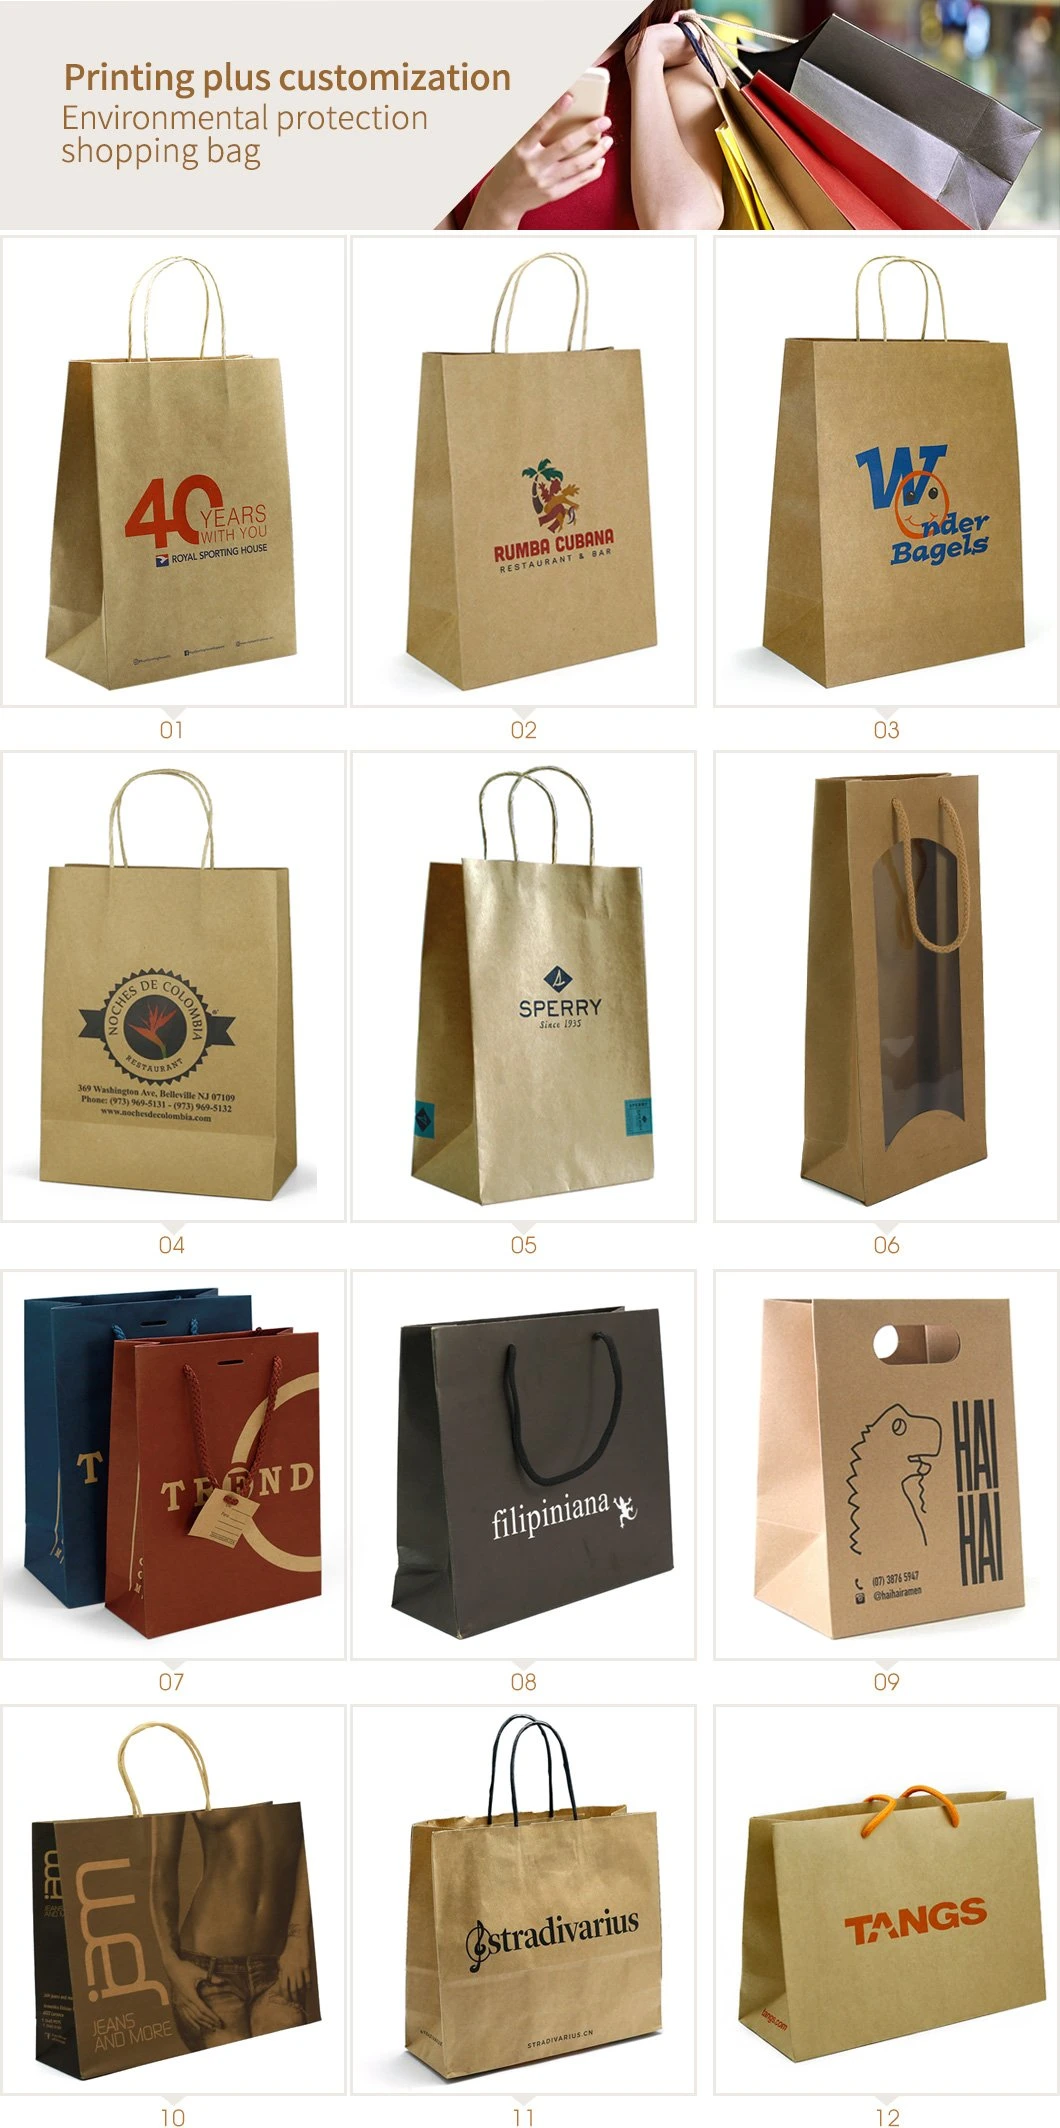 Festival Gift Bag Shopping Bags Multifunction Fashion Stripe Kraft Paper Present Bag with Handles